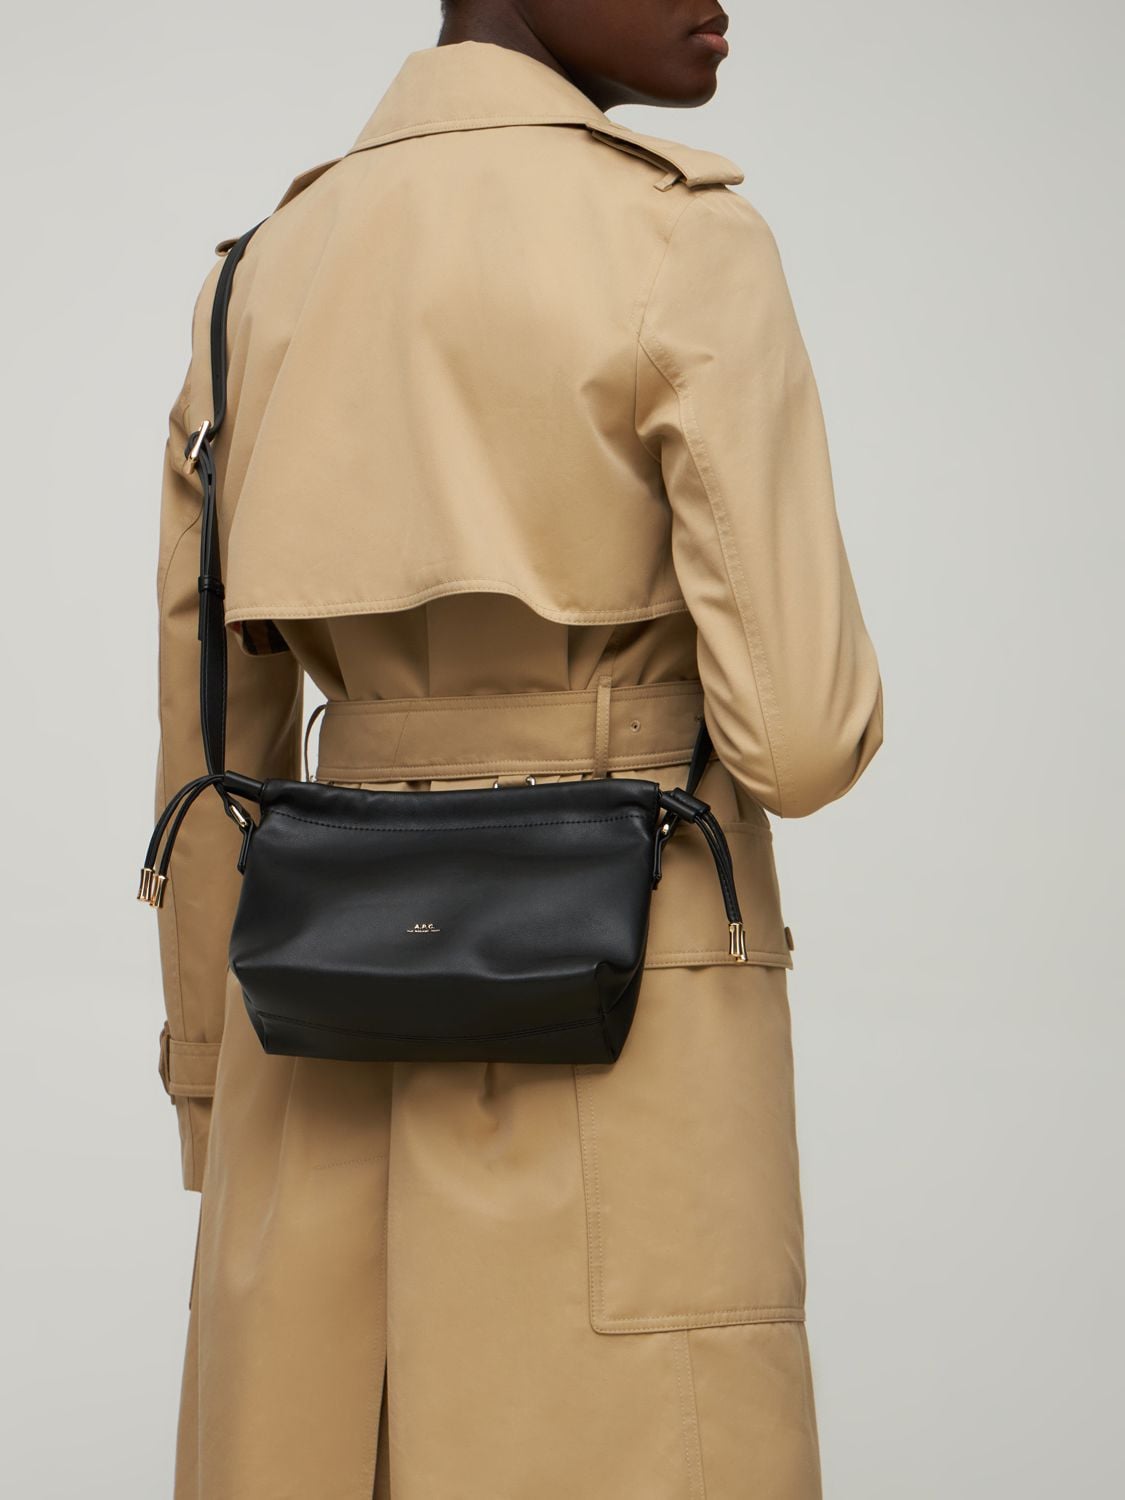 Shop Apc Mini Sac Ninon Shoulder Bag In Black